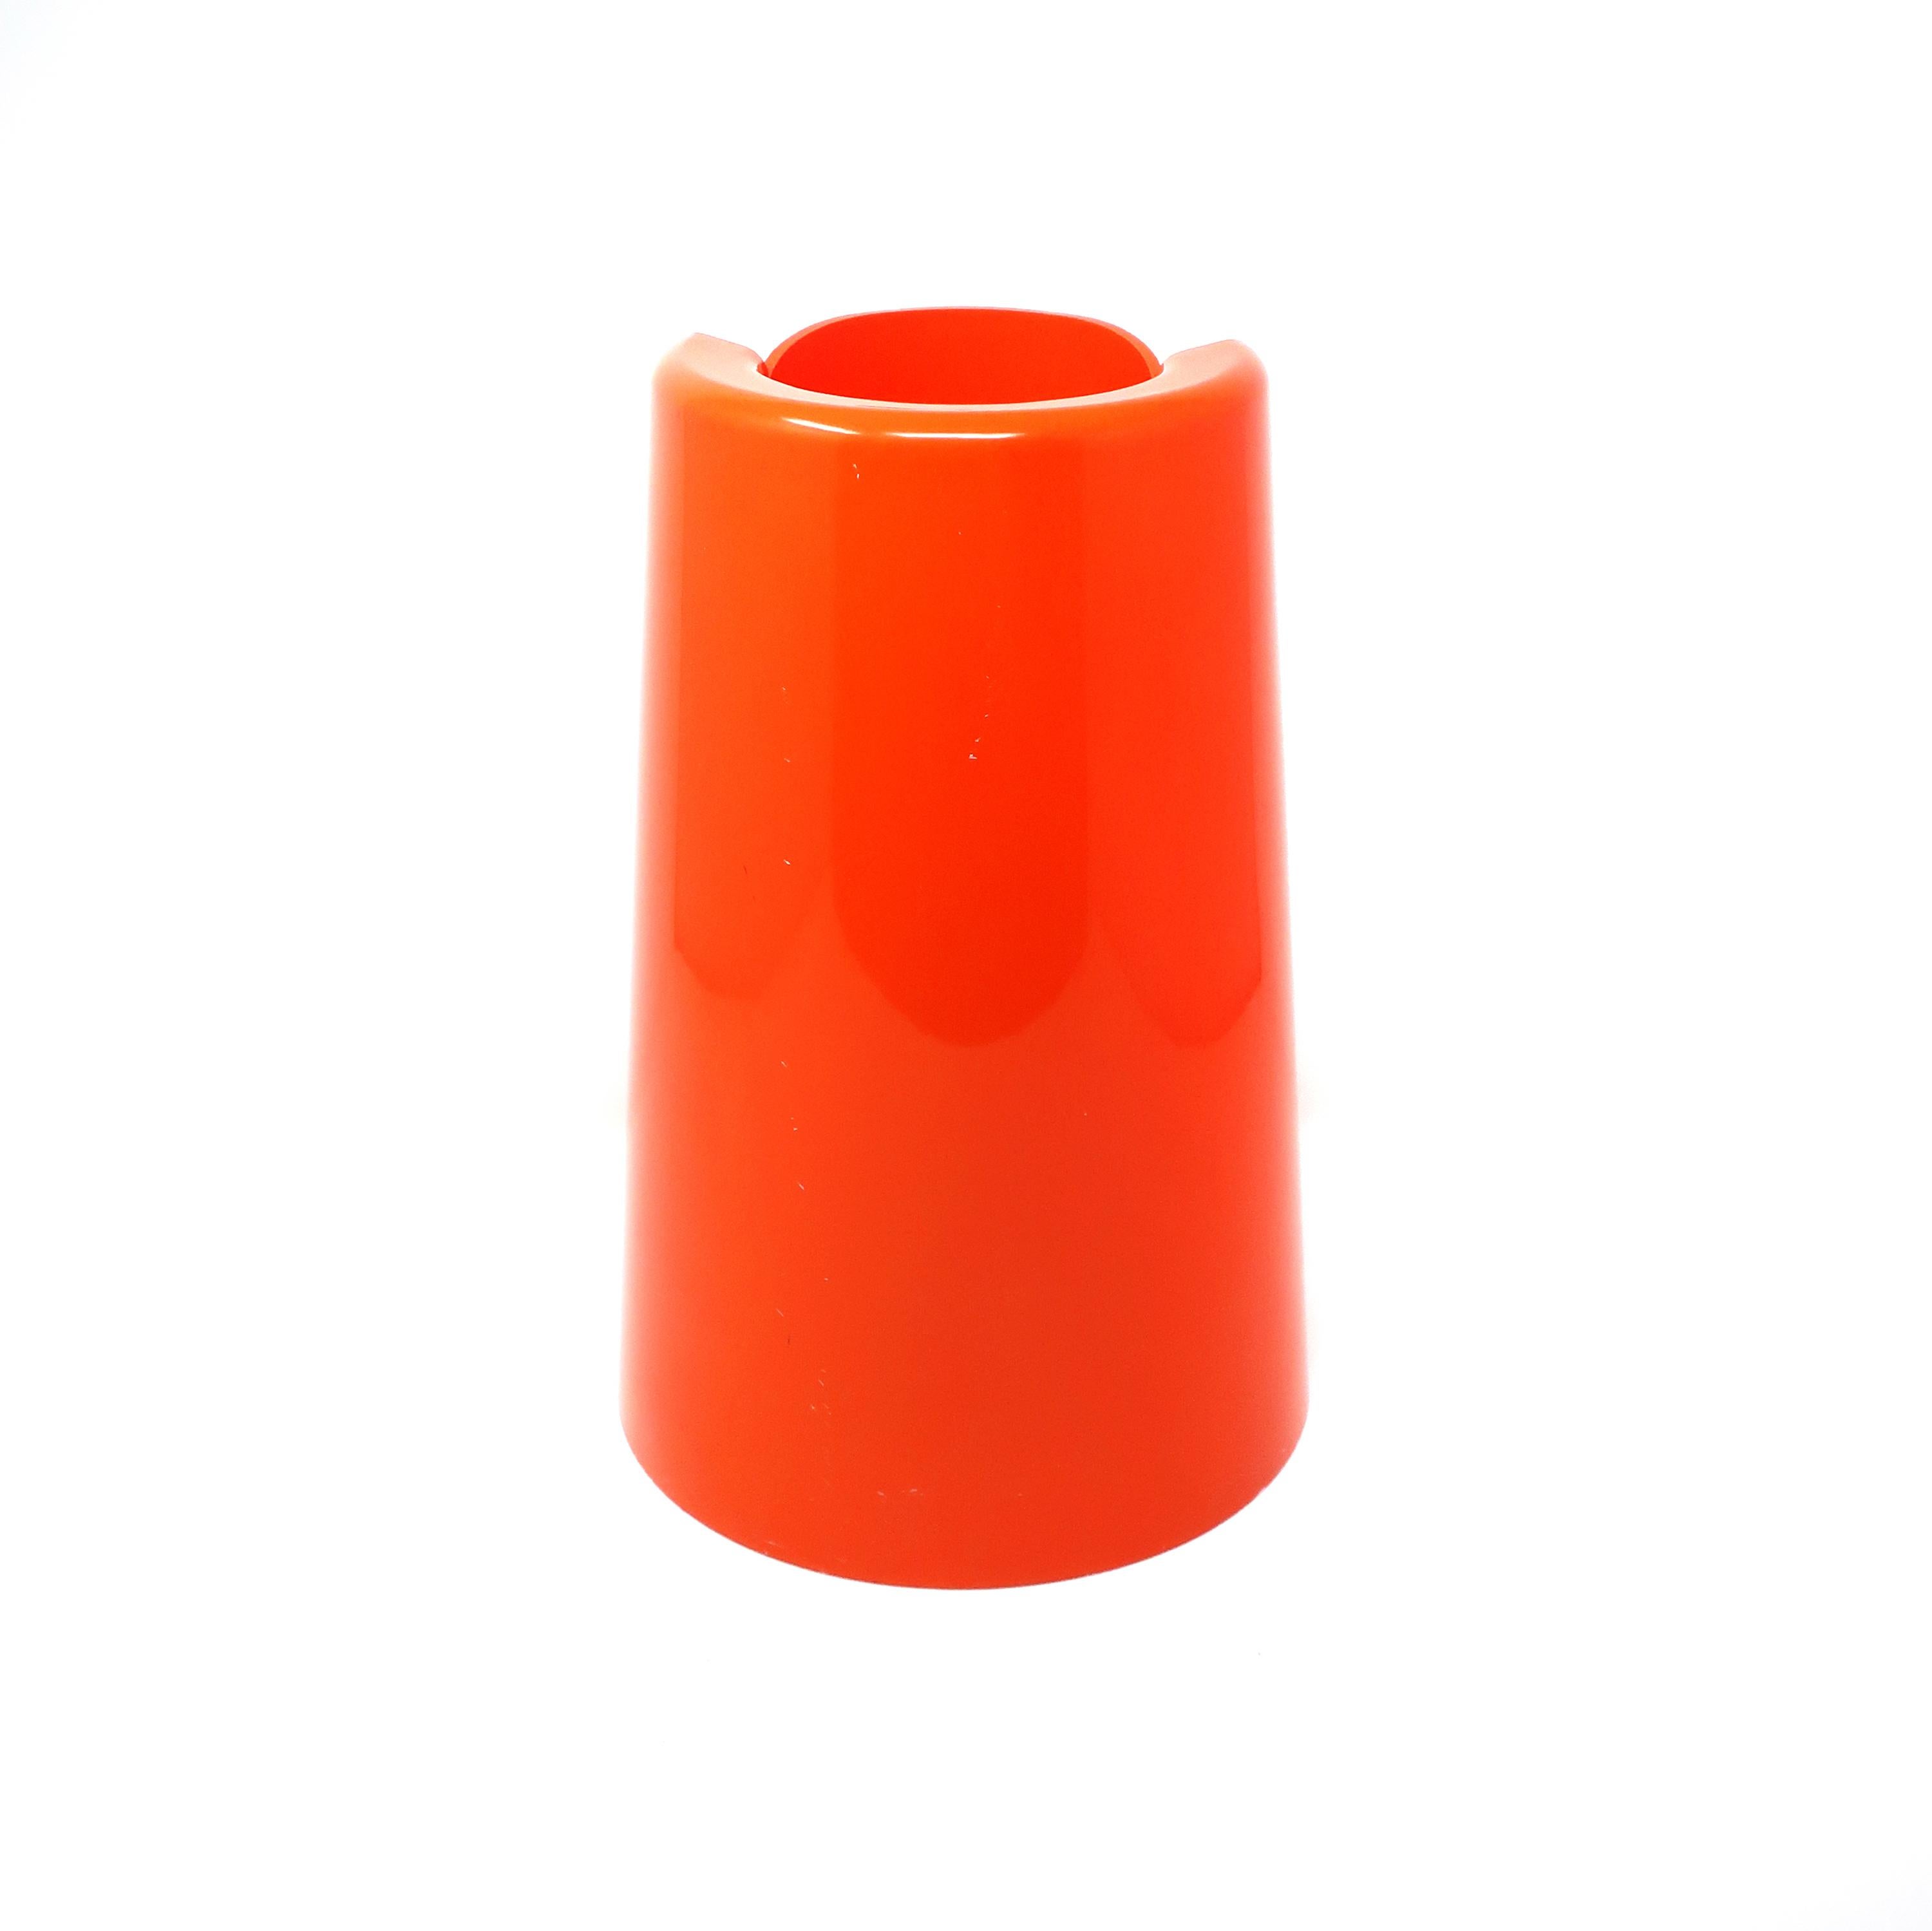 Plastic Orange Pago Pago Vase by Enzo Mari for Danese